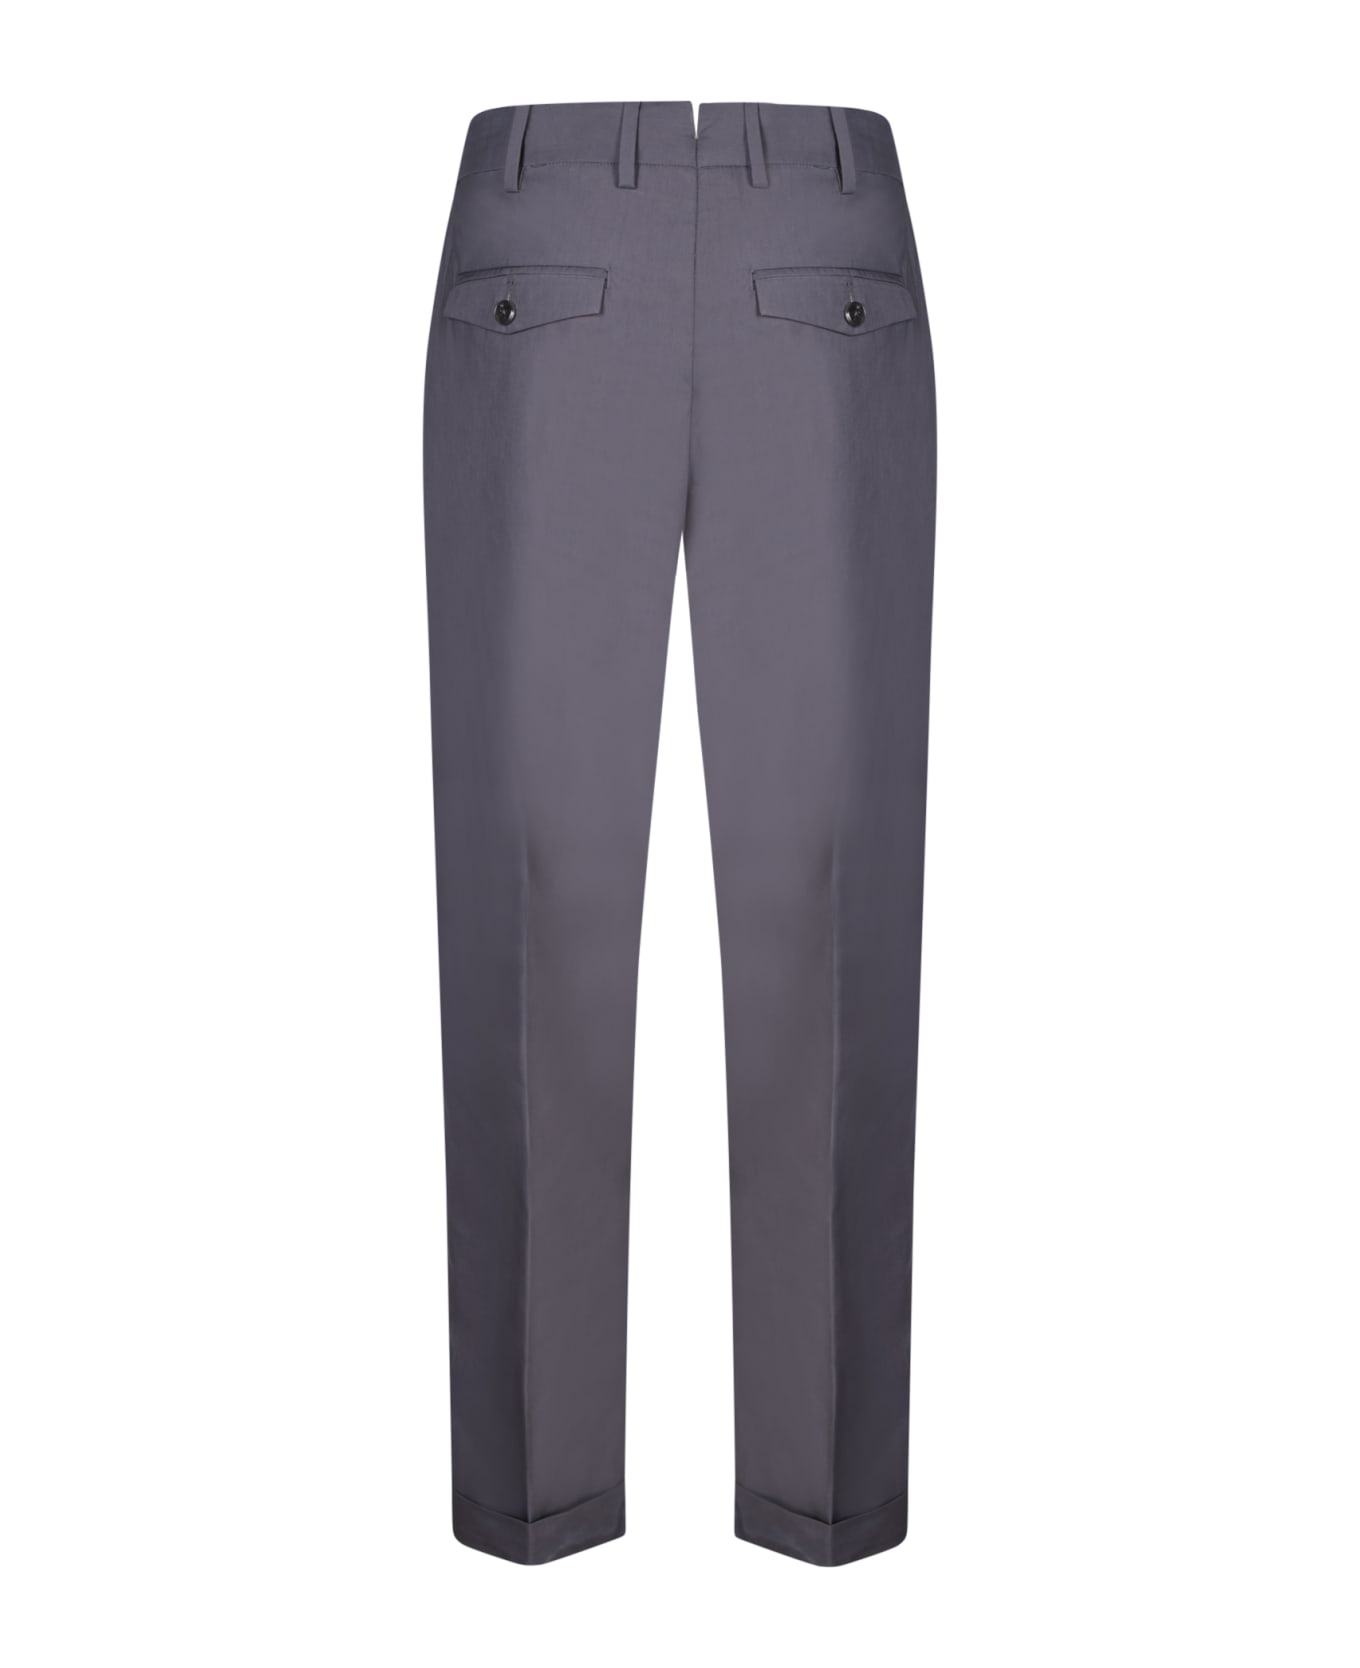 PT Torino Rebel Grey Trousers - Grey